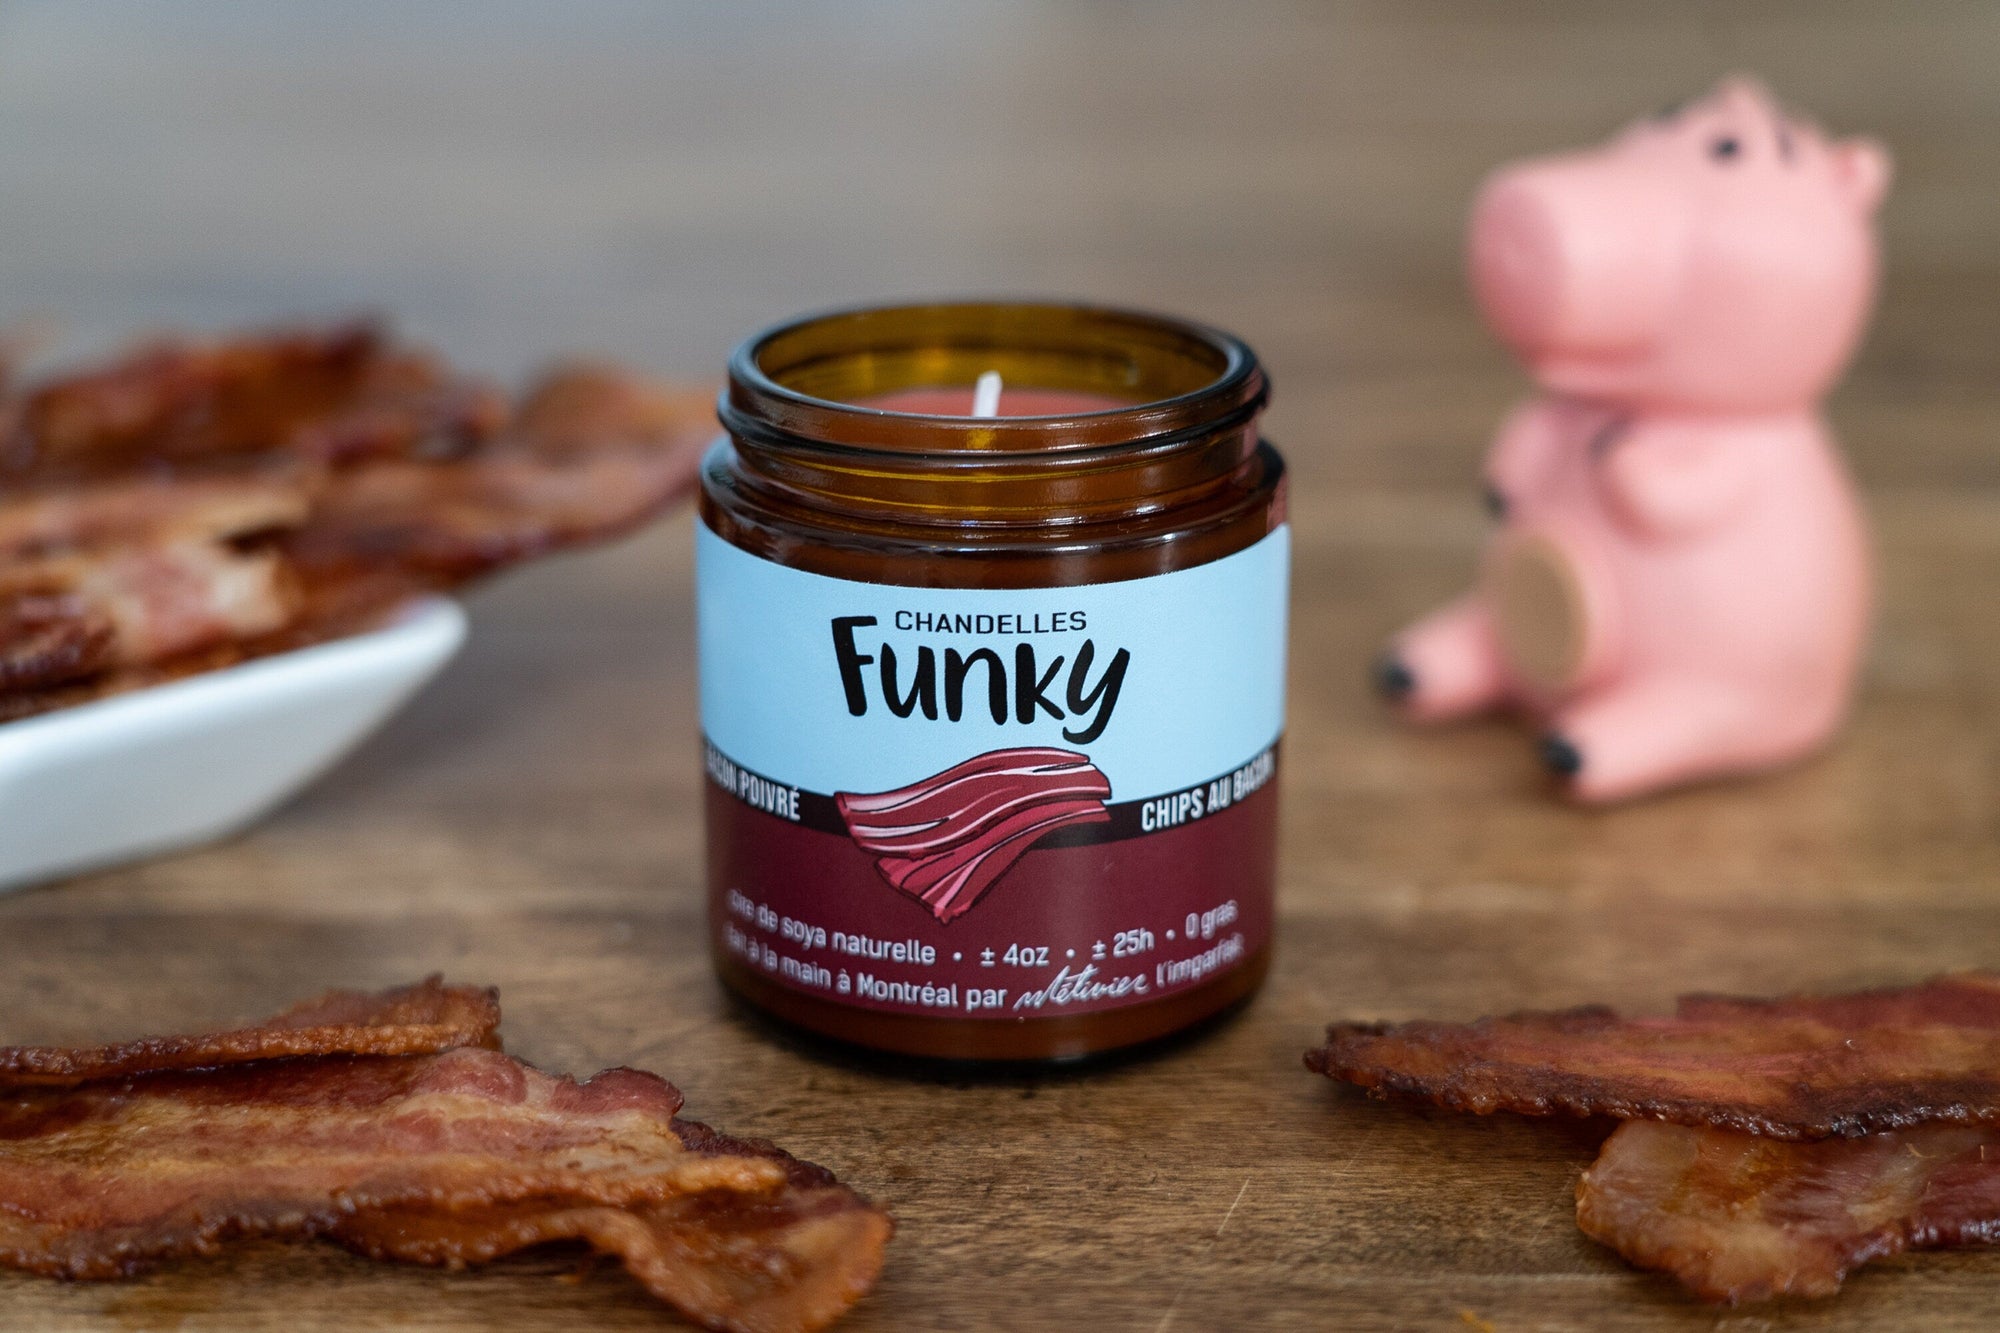 Chandelle Bacon poivré - Funky - Funky & Co.